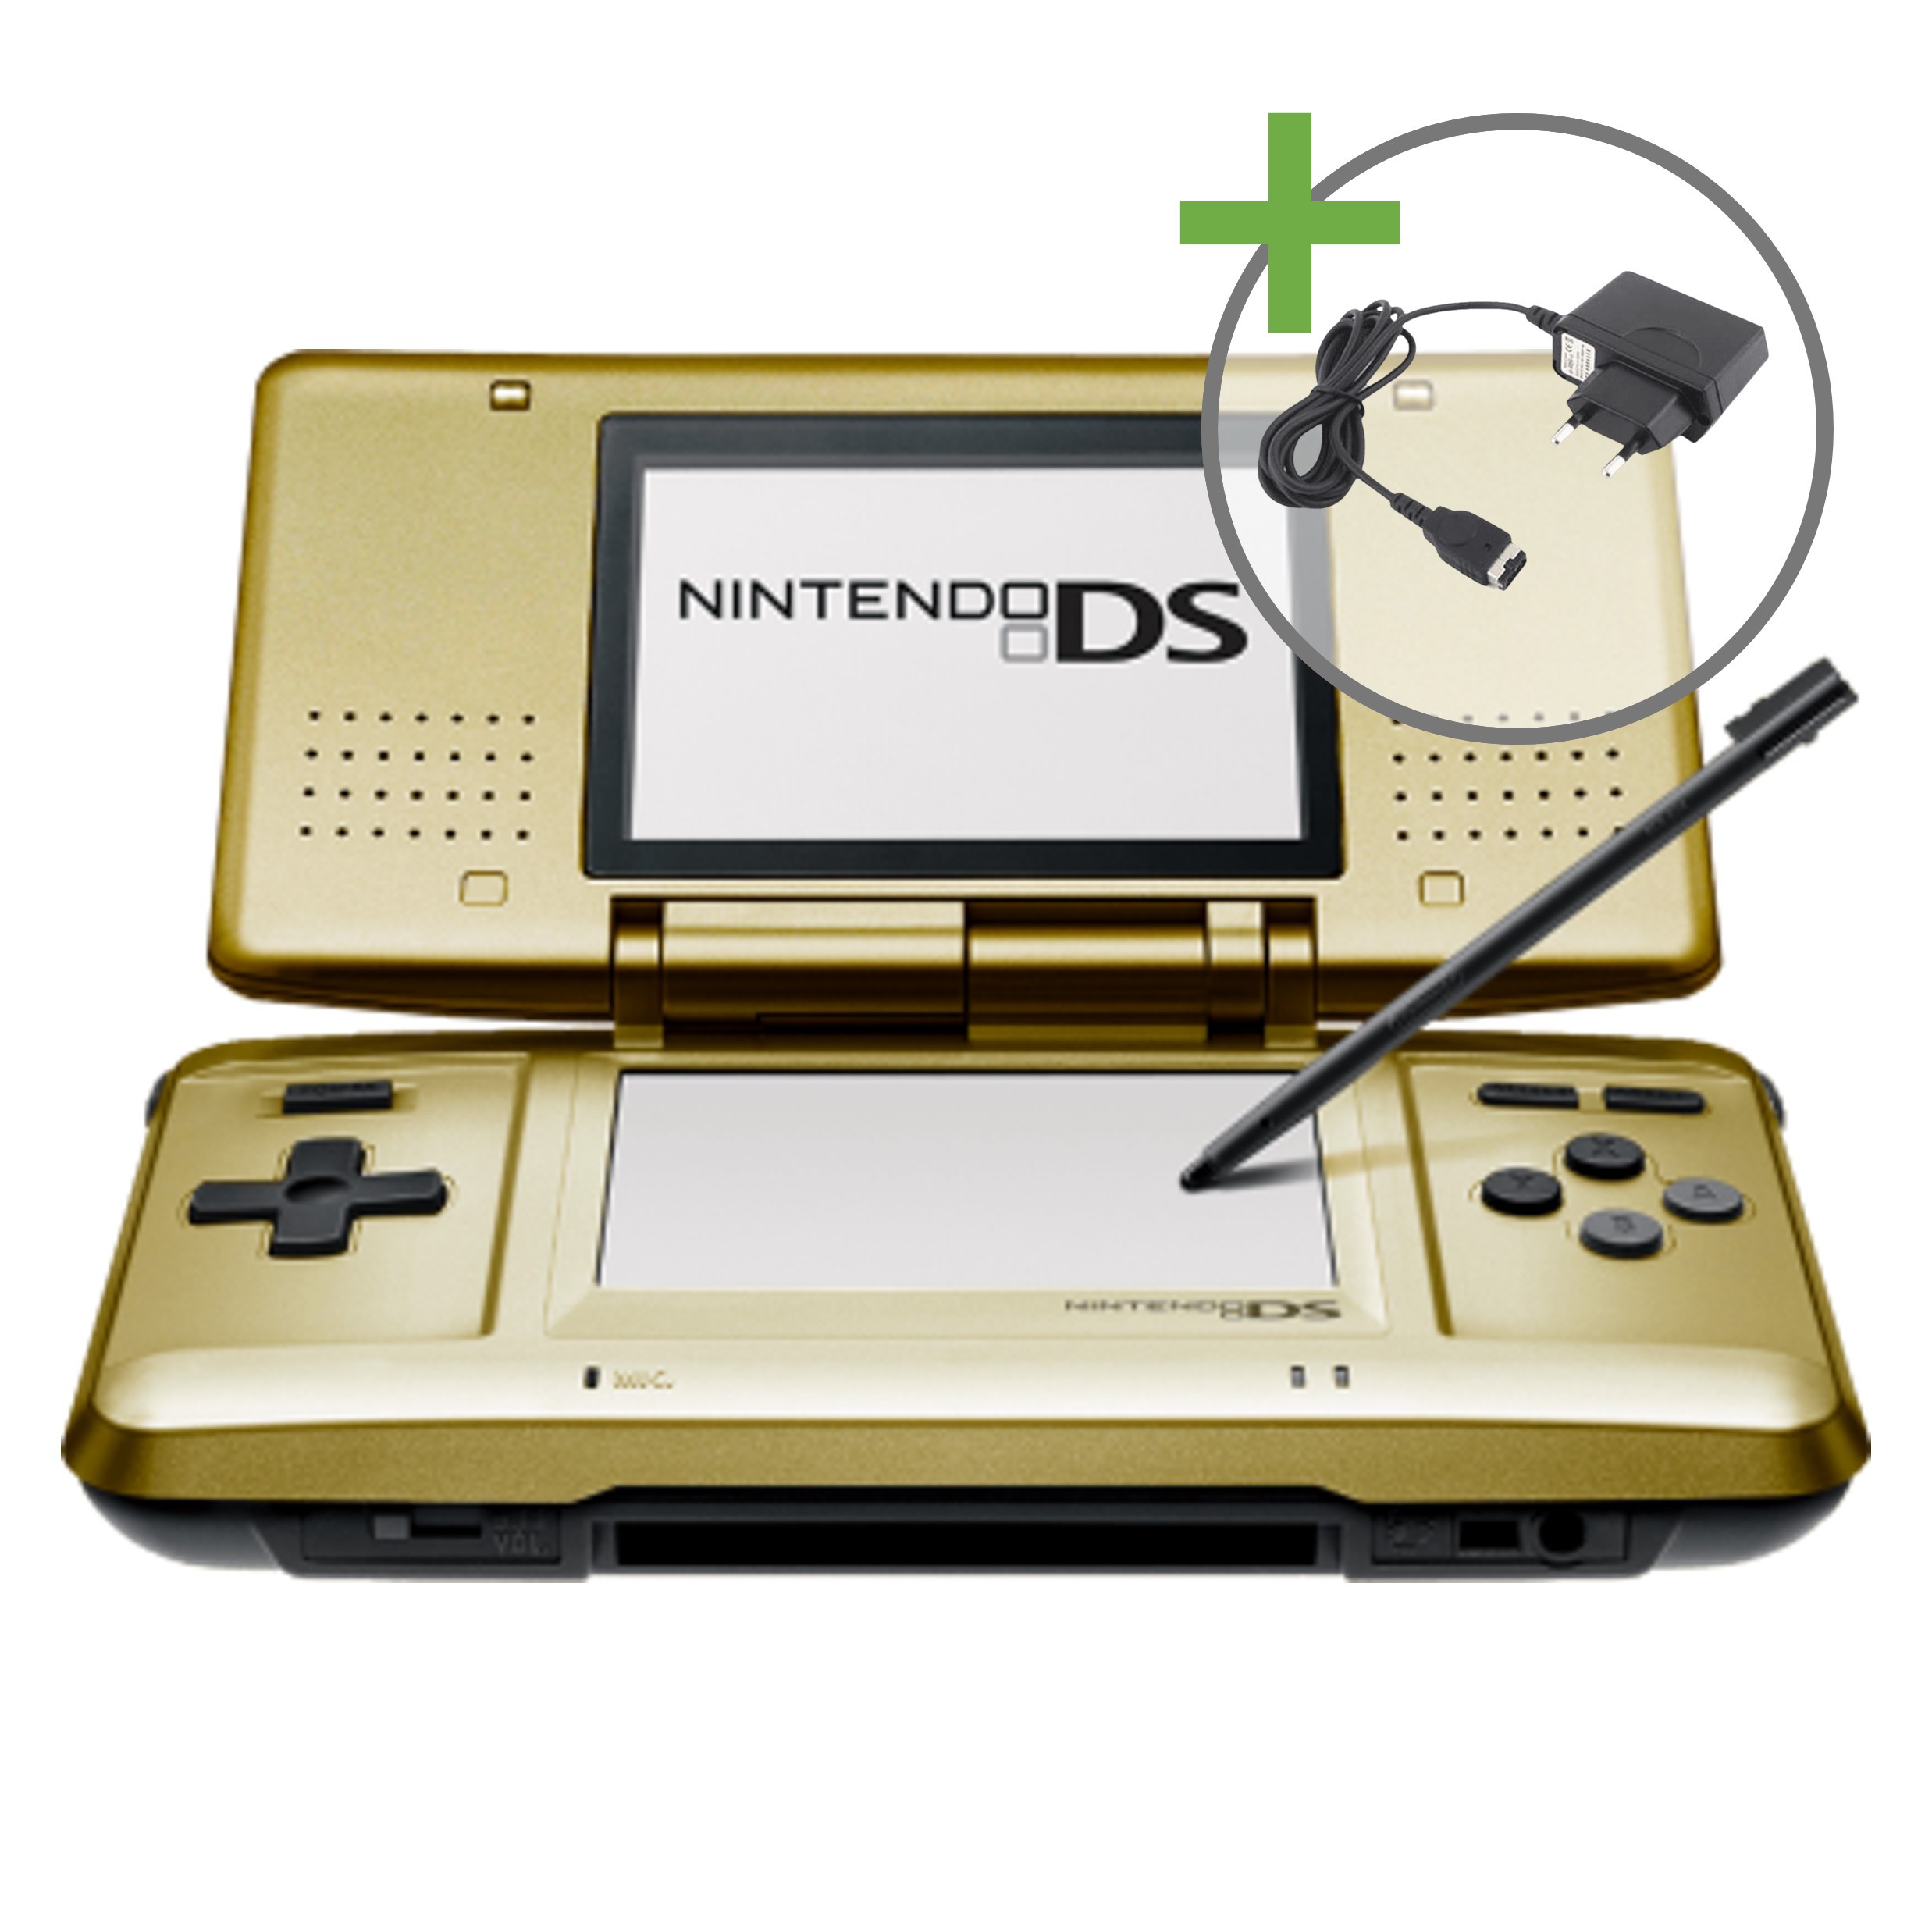 Nintendo DS Original - Toys 'R Us Gold Edition - Nintendo DS Hardware